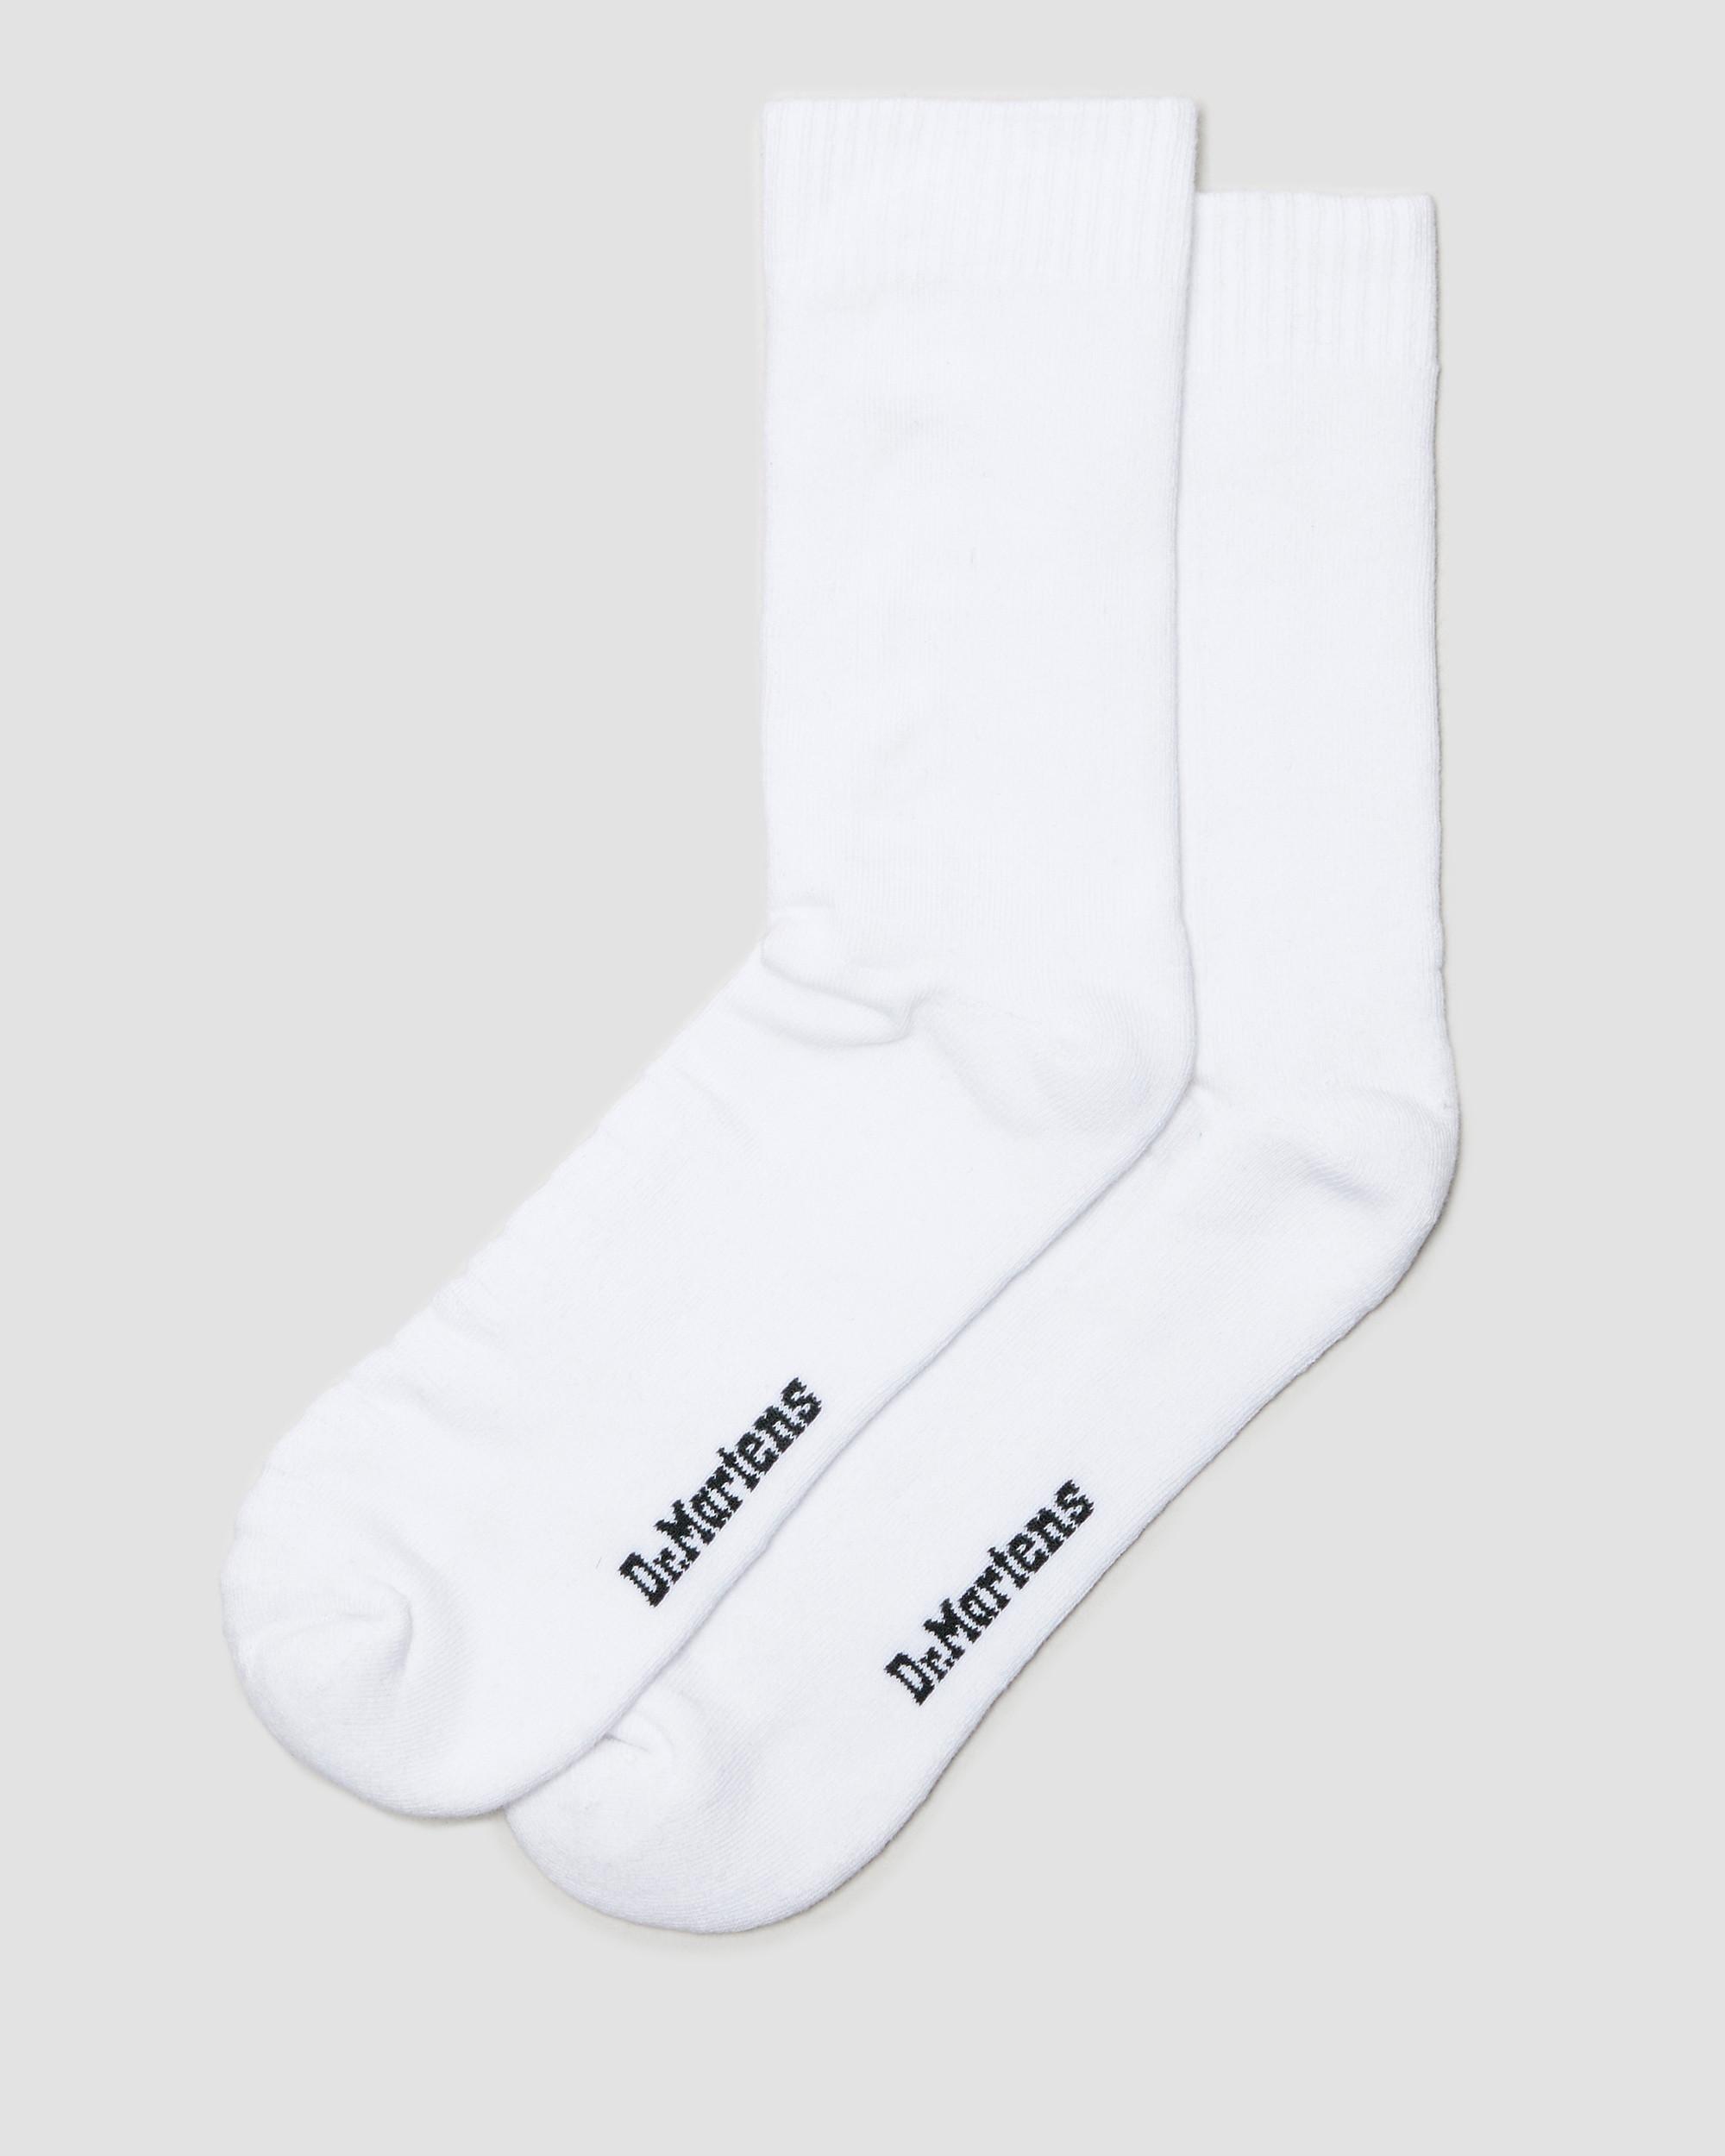 Double Doc Cotton Blend Socks in White